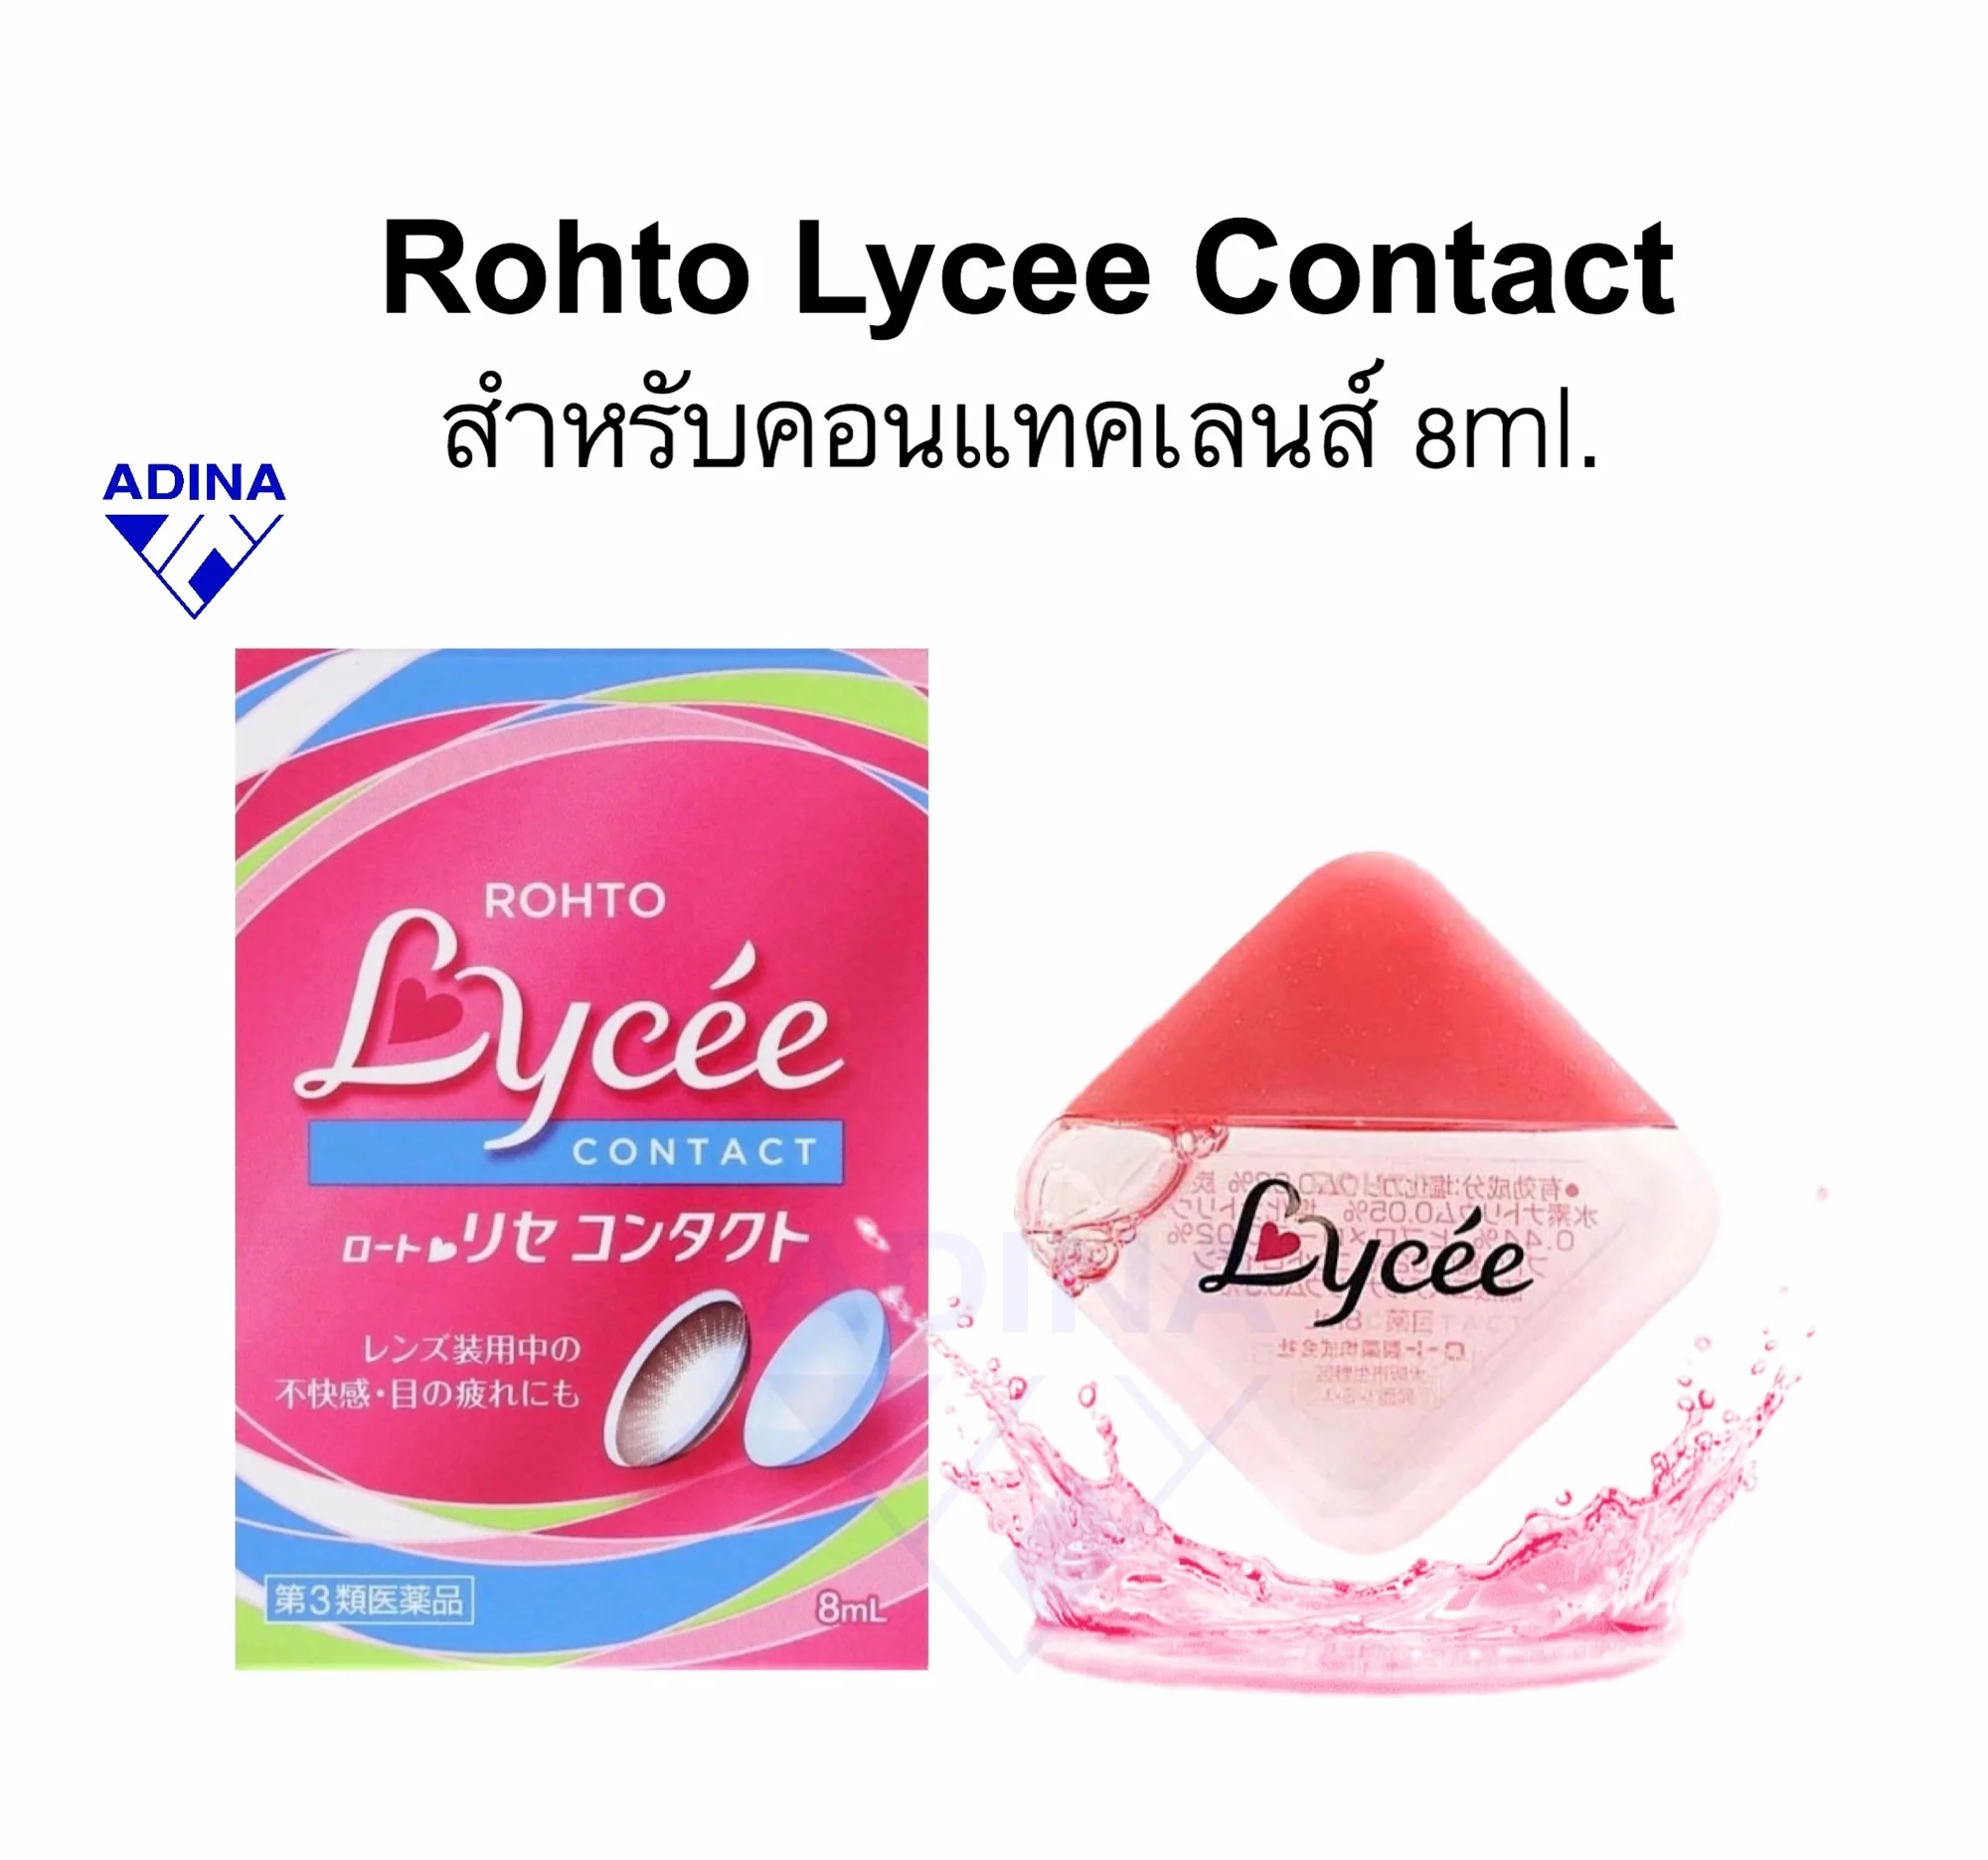 Rohto Lycee Contact (8 ml.) น้ำยาหยอดตาญี่ปุ่นสำหรับคอนแทคเลนส์ ความเย็นระดับ 1